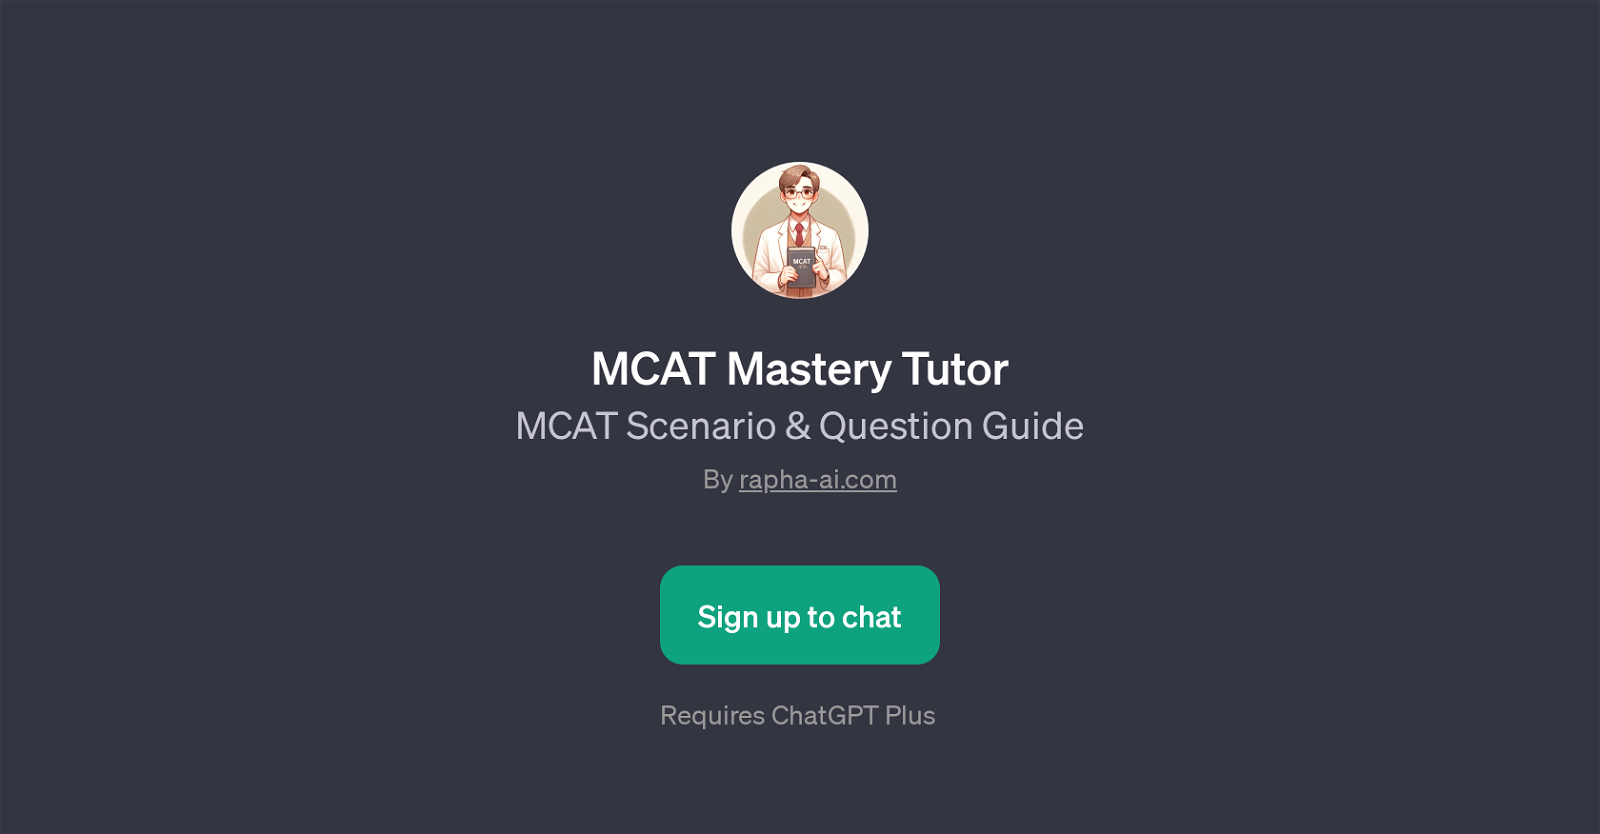 MCAT Mastery Tutor website